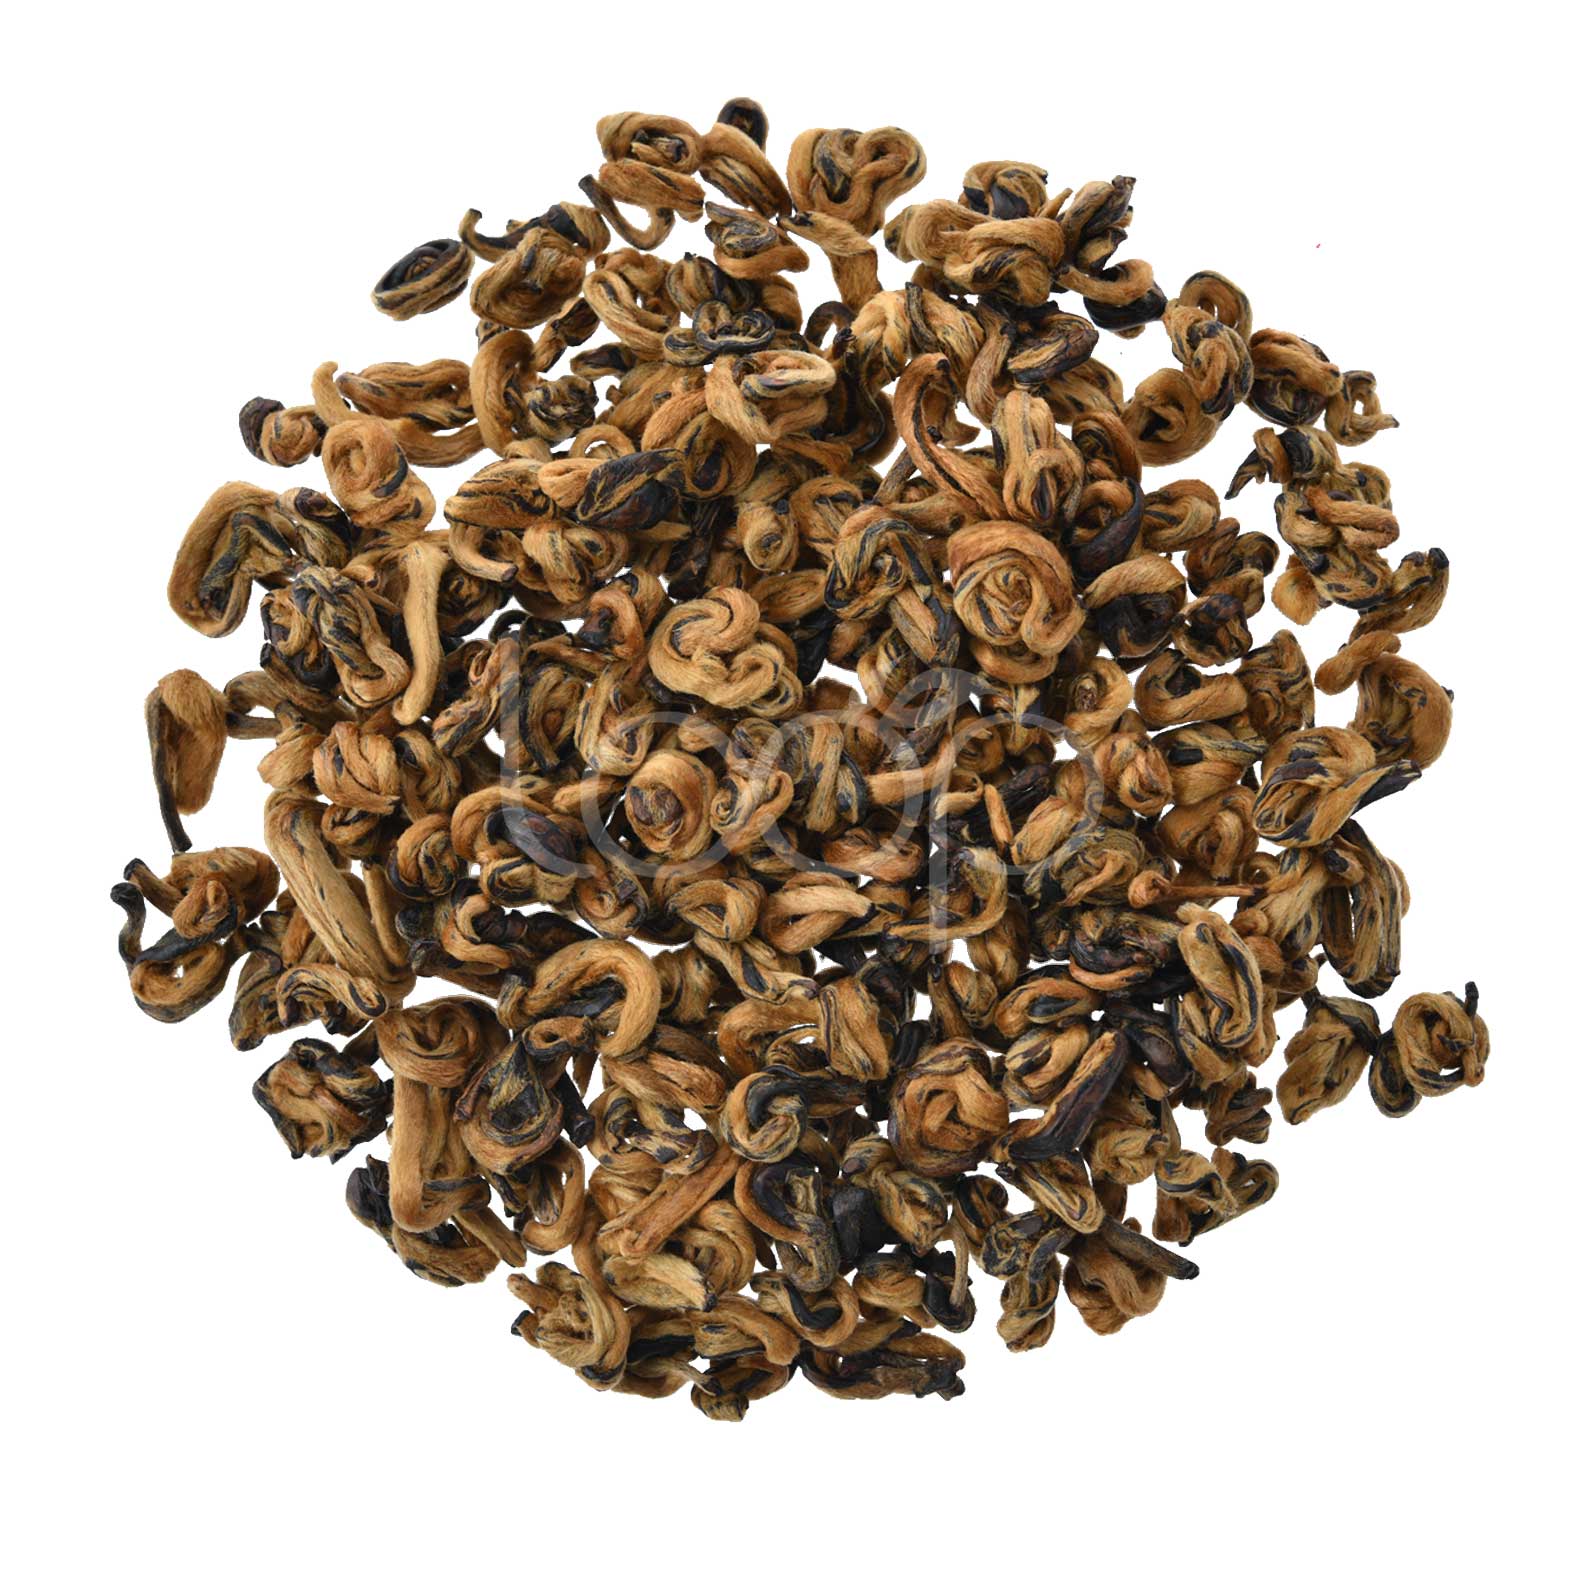 2022 High quality Organic Black Tea Powder - Golden Spiral Tea China Black Tea #1 – Goodtea